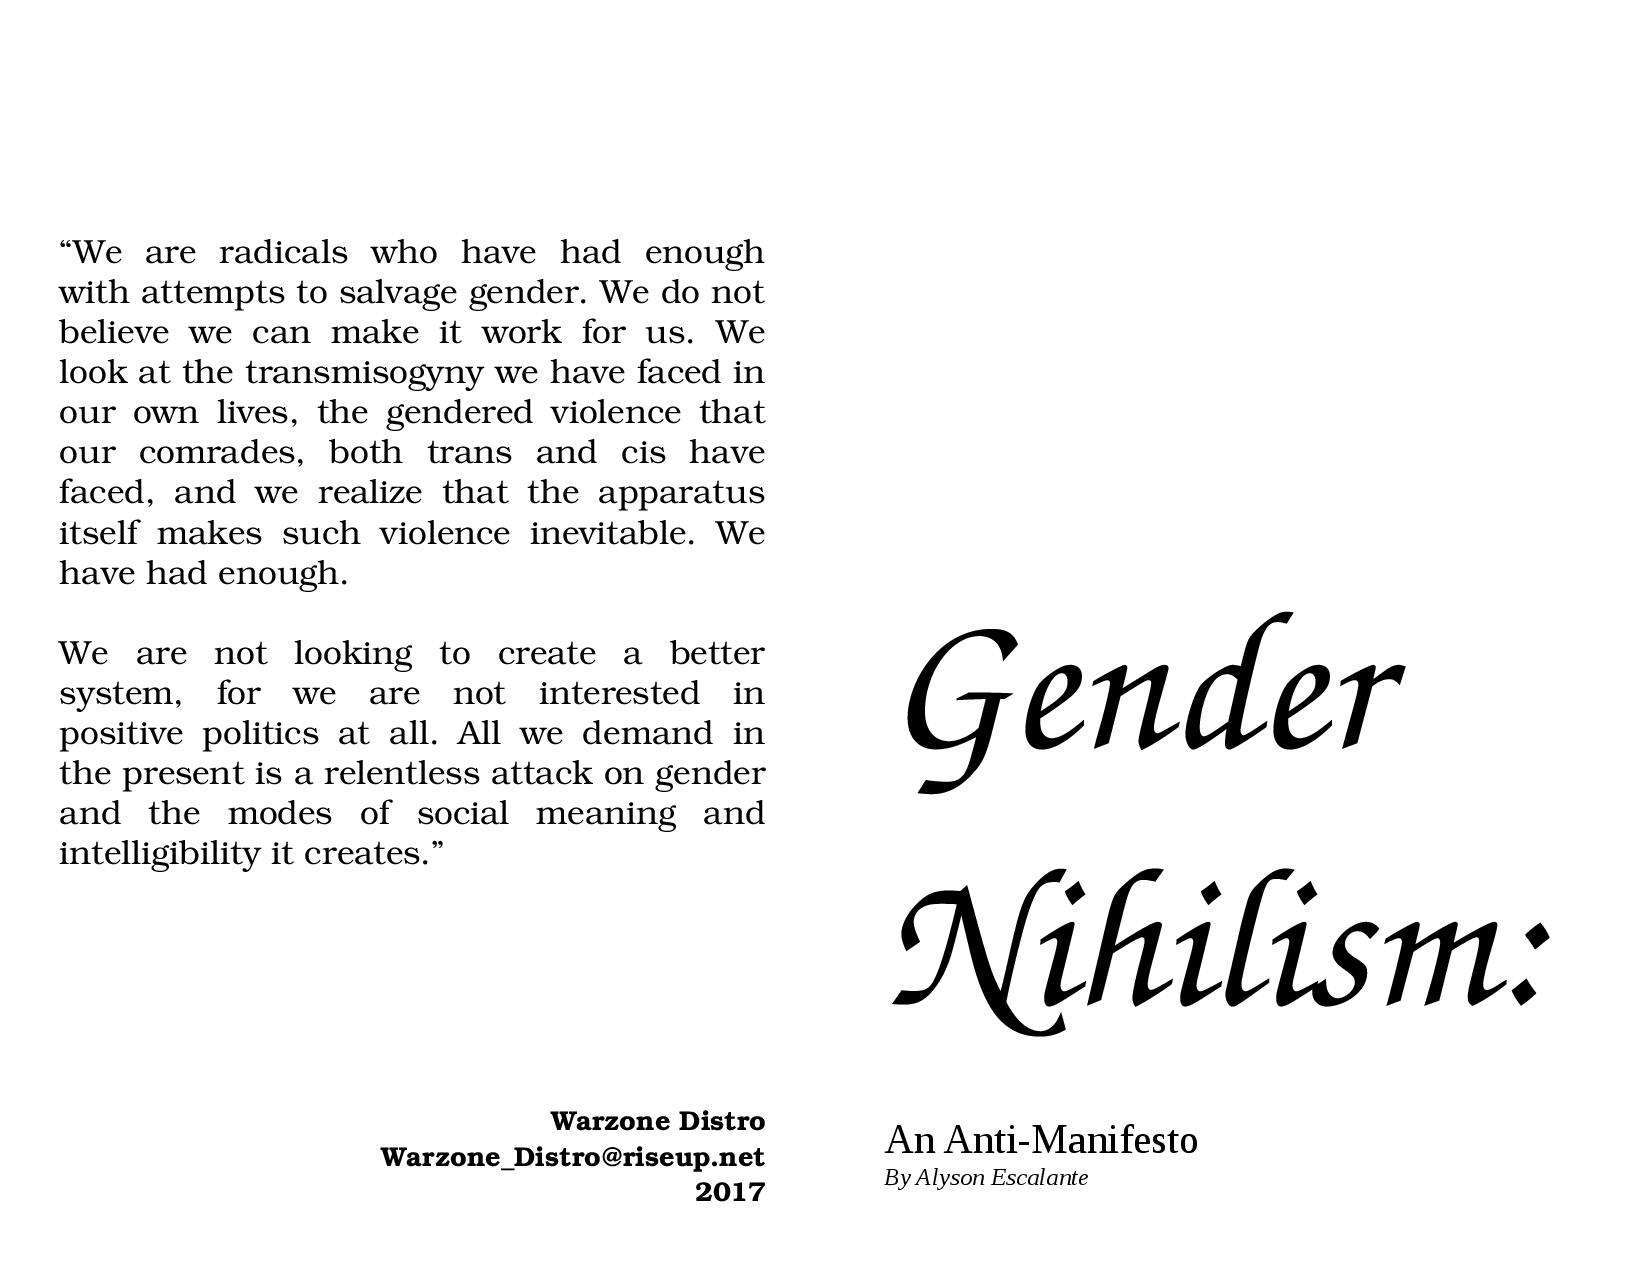 Gender Nihilism: An Anti-Manifesto